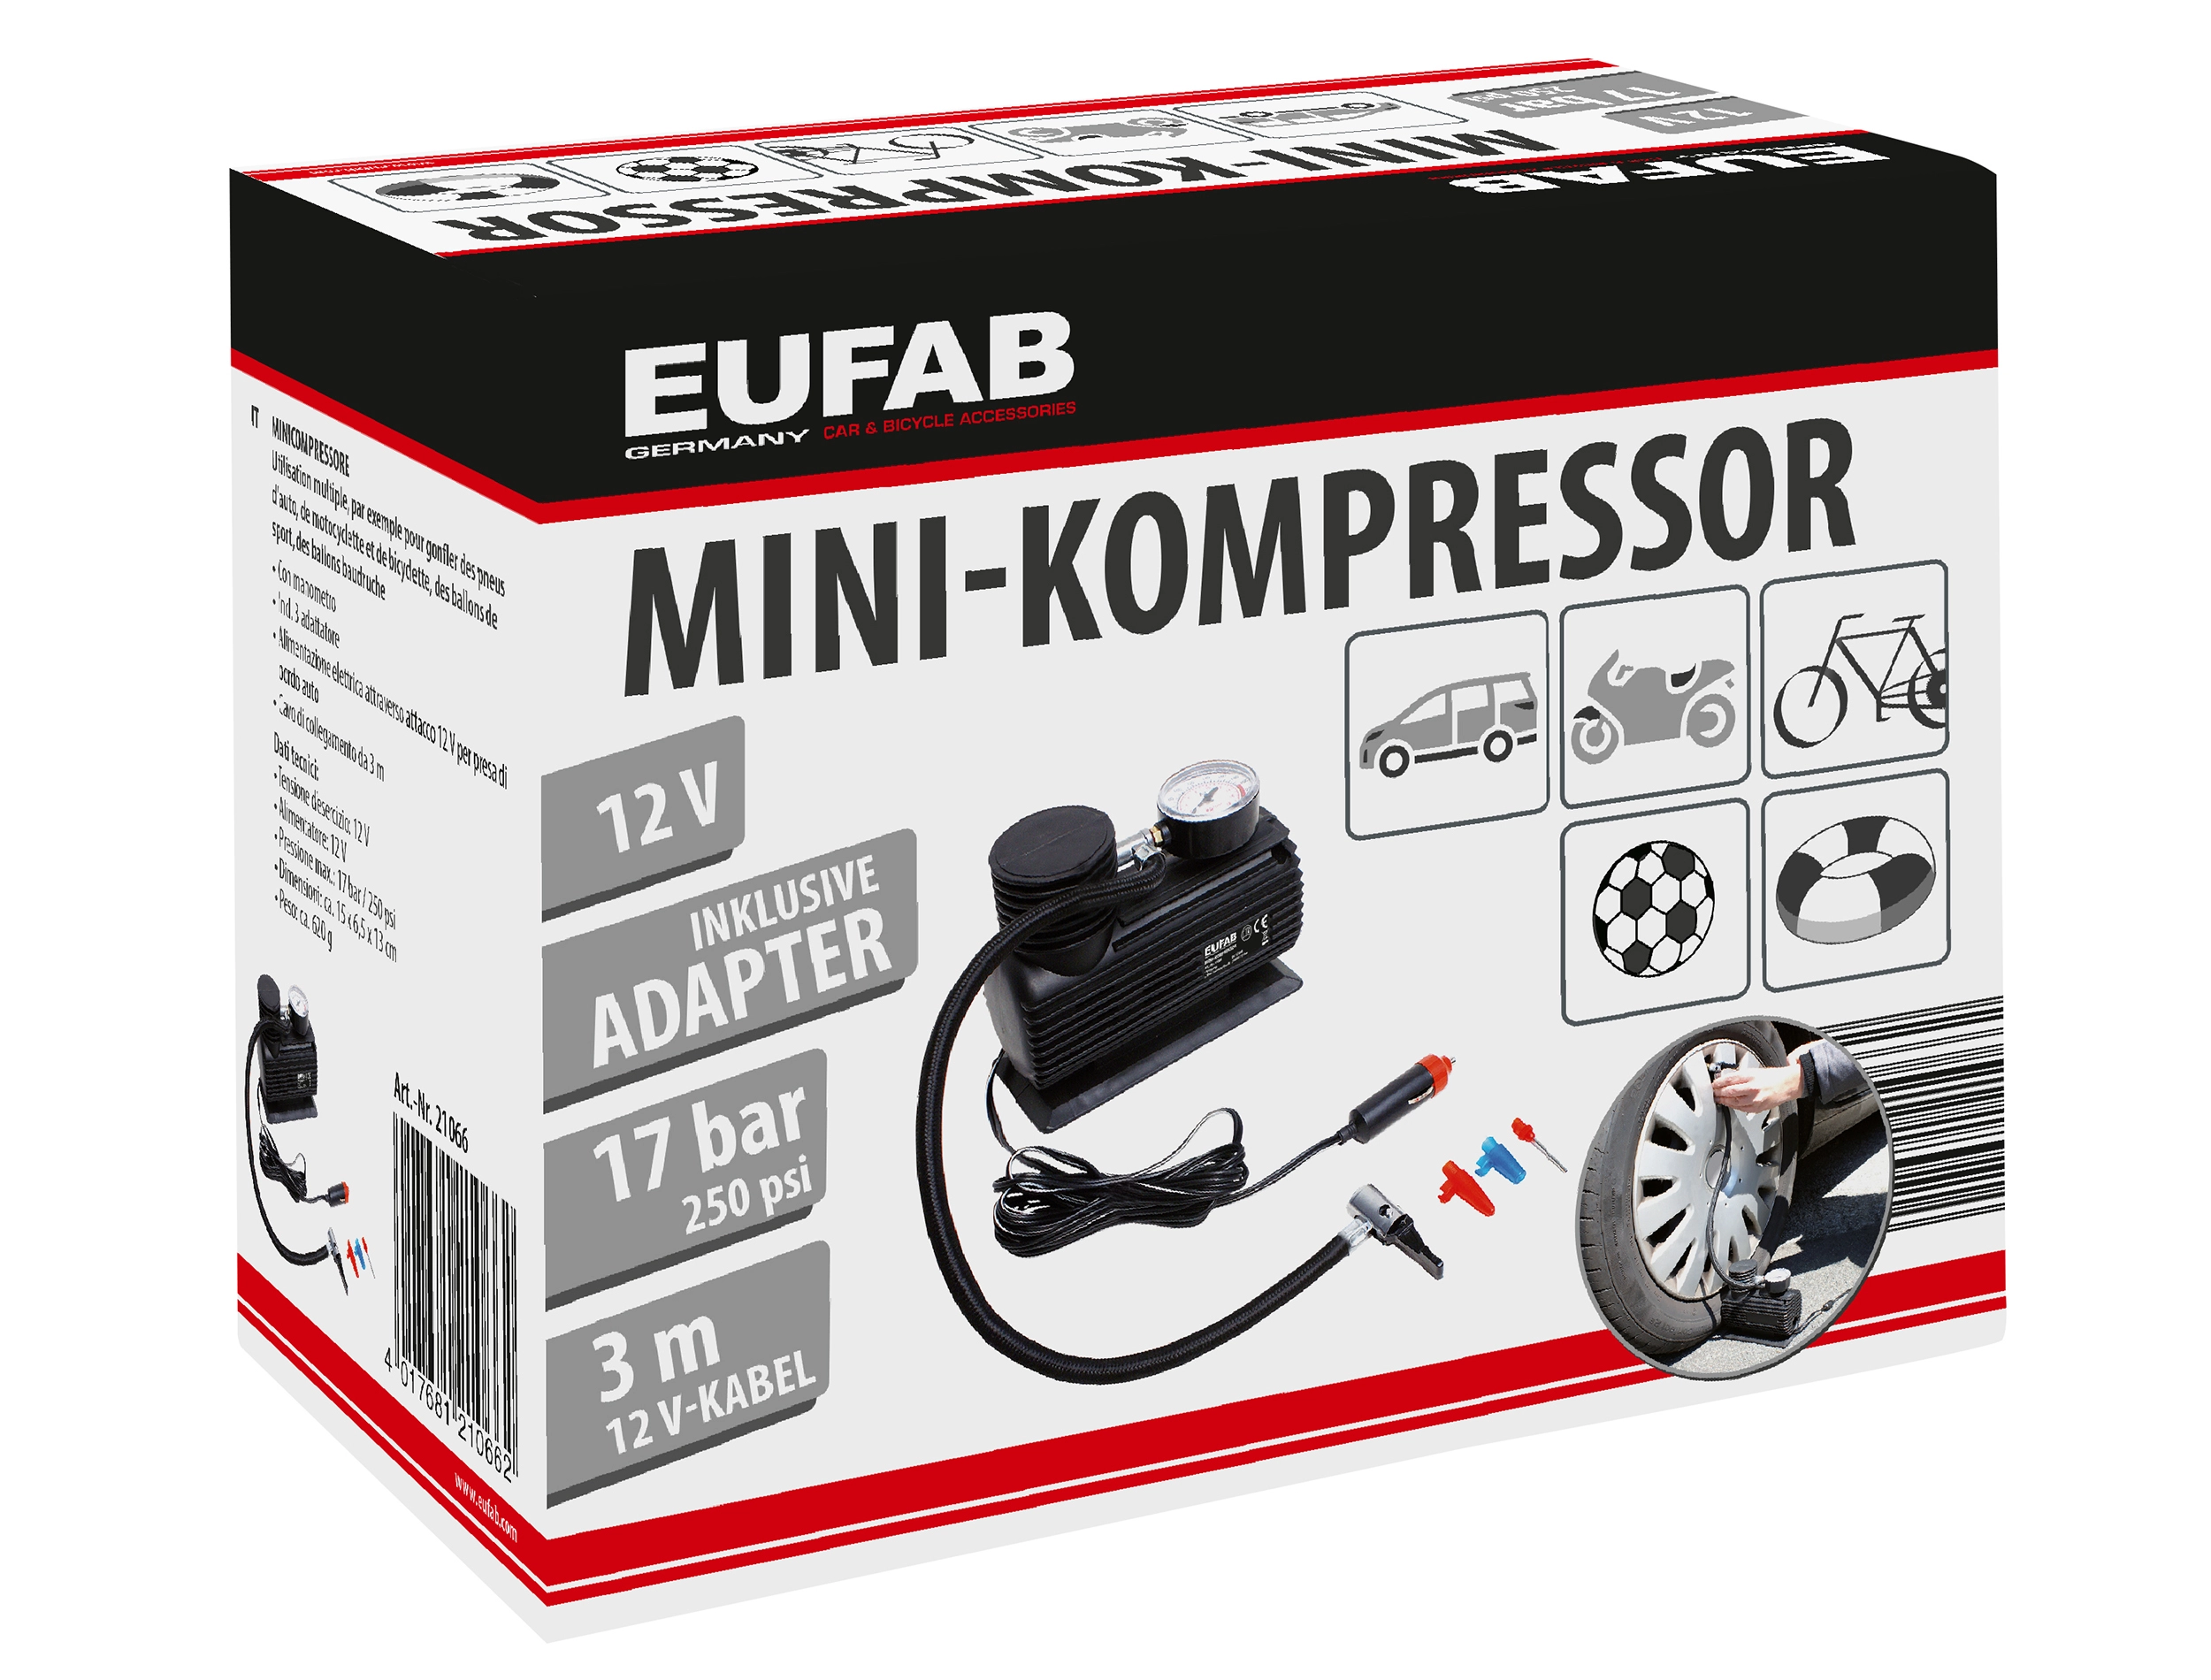 OBI Mini-Kompressor V kaufen 12 bei Eufab 21066